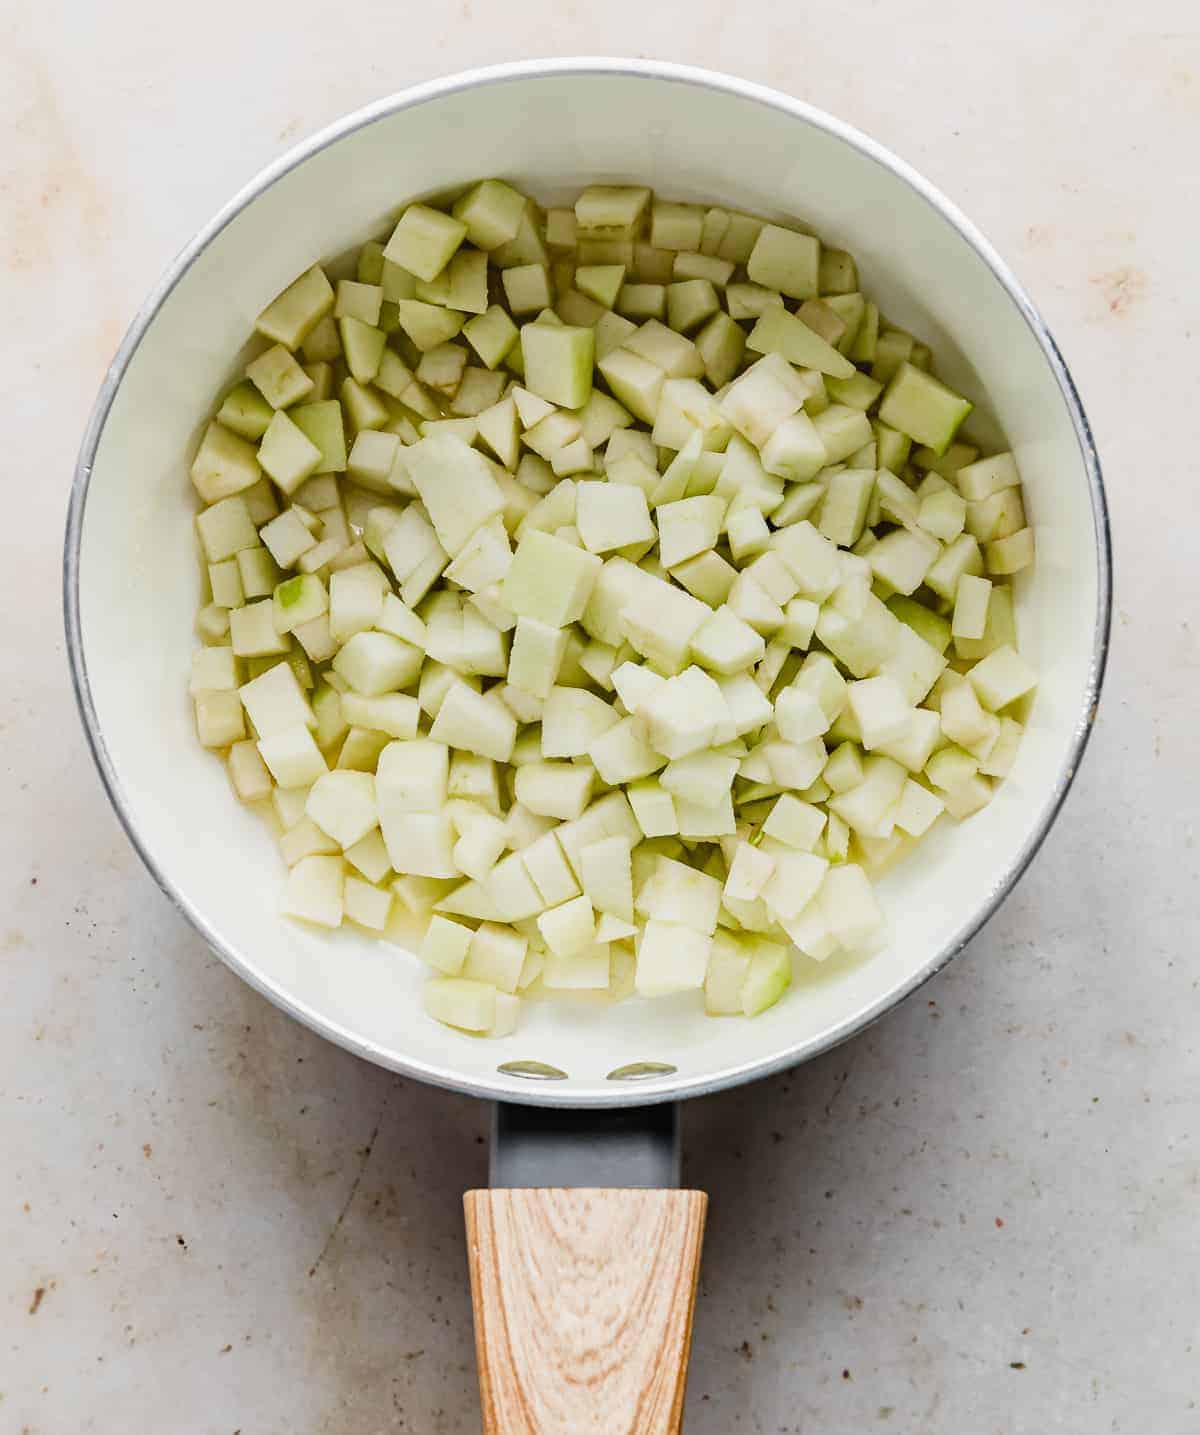 Diced apples in a white saucepan.